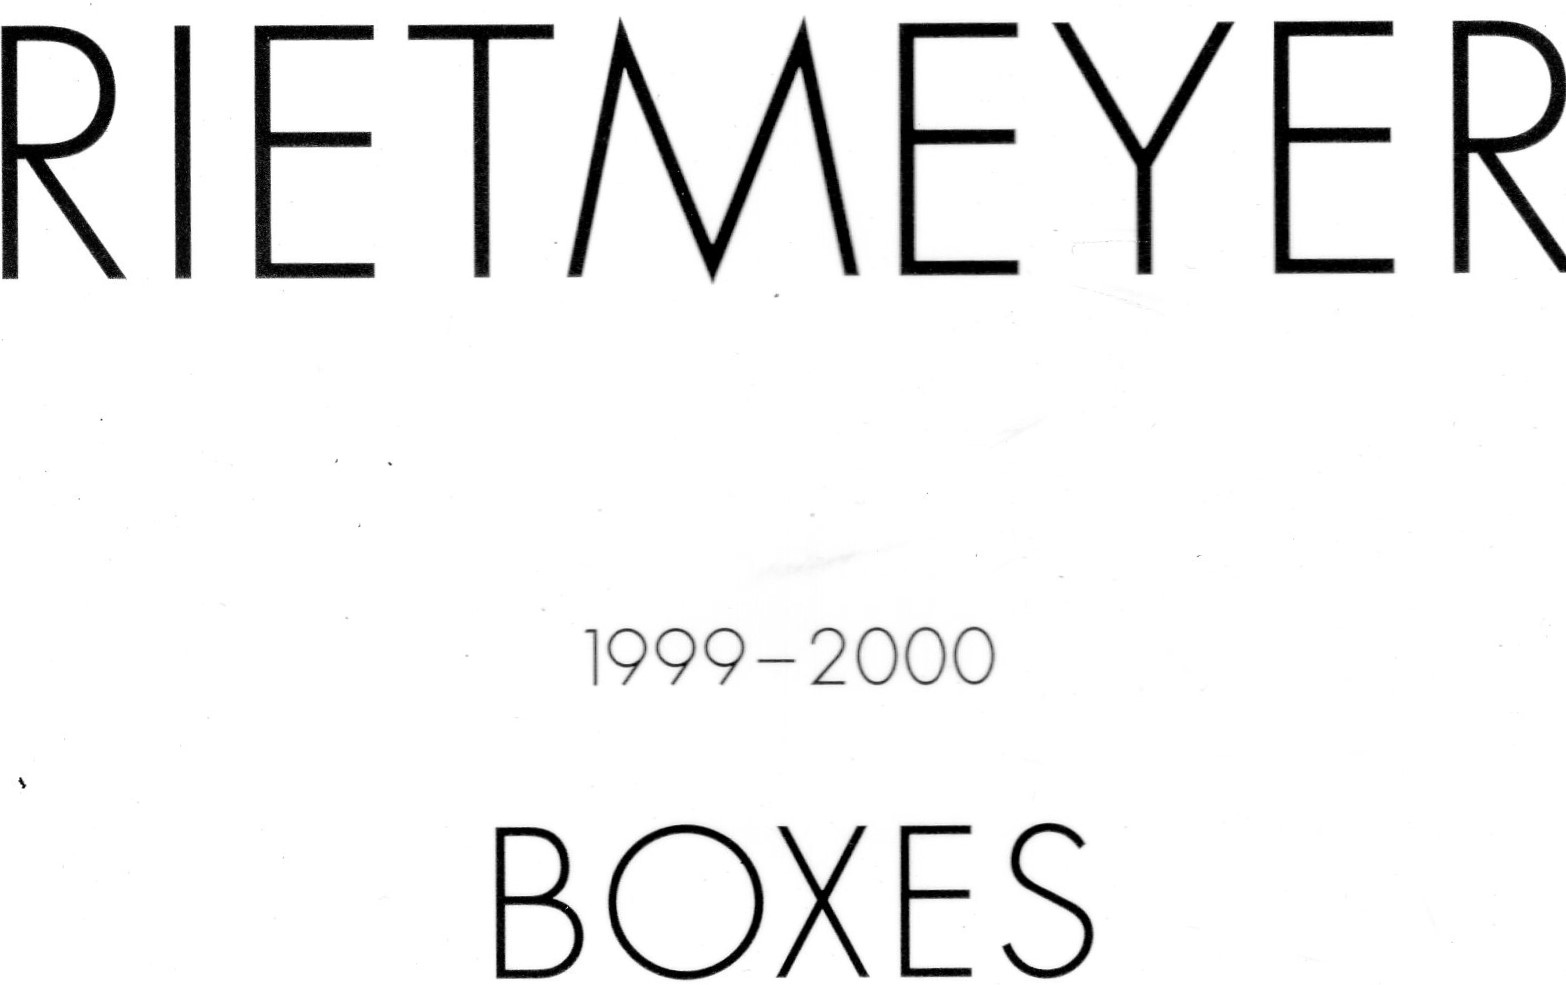  - Rietmeyer Boxes 1999-2000.